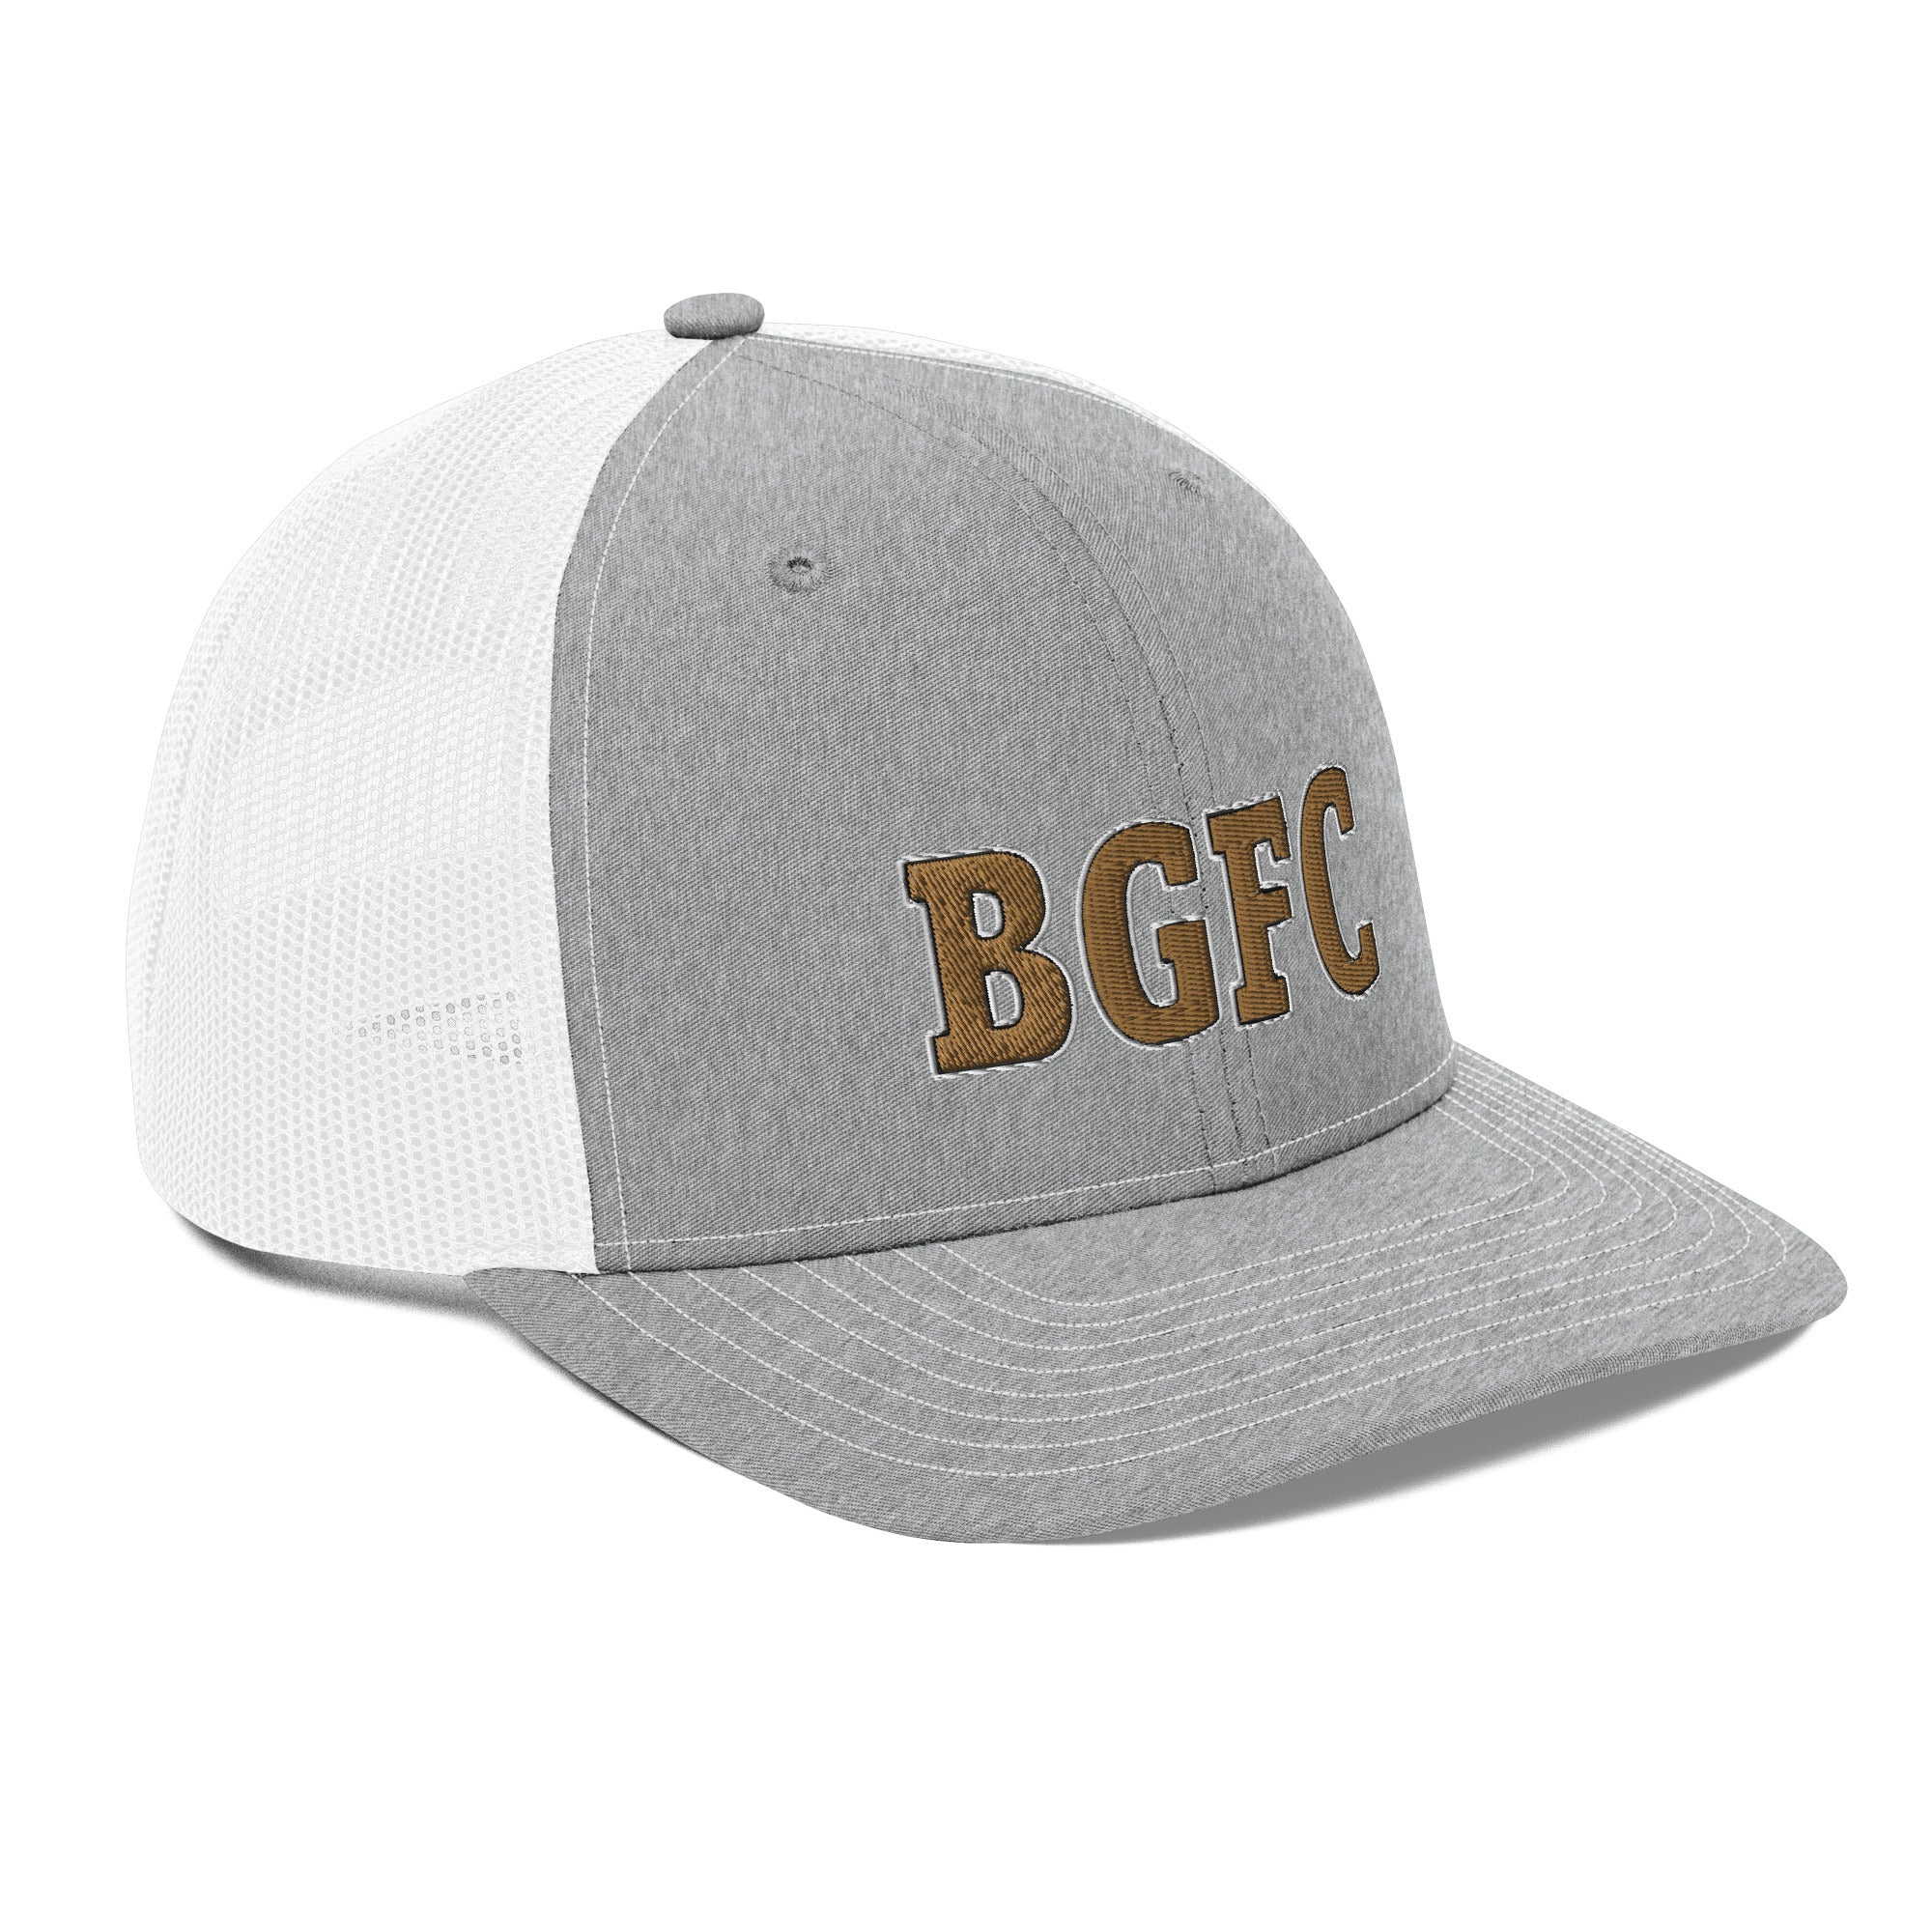 BGFC Mesh Cap